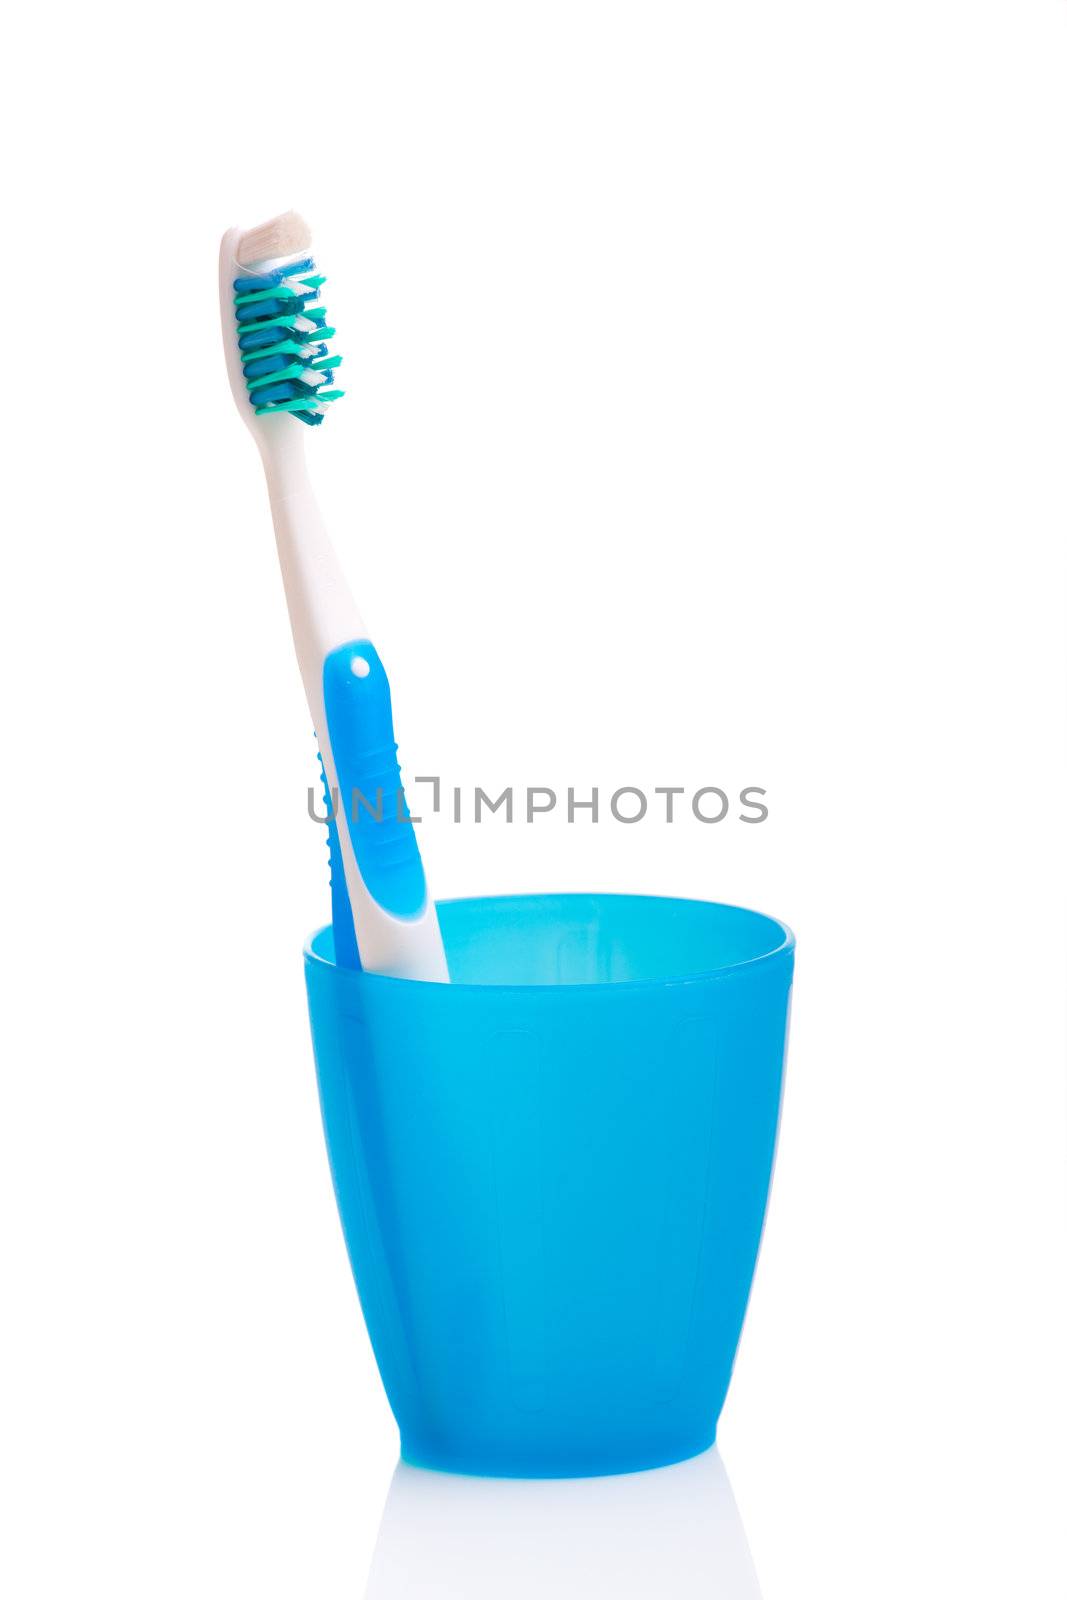 Toothbrush by Iko